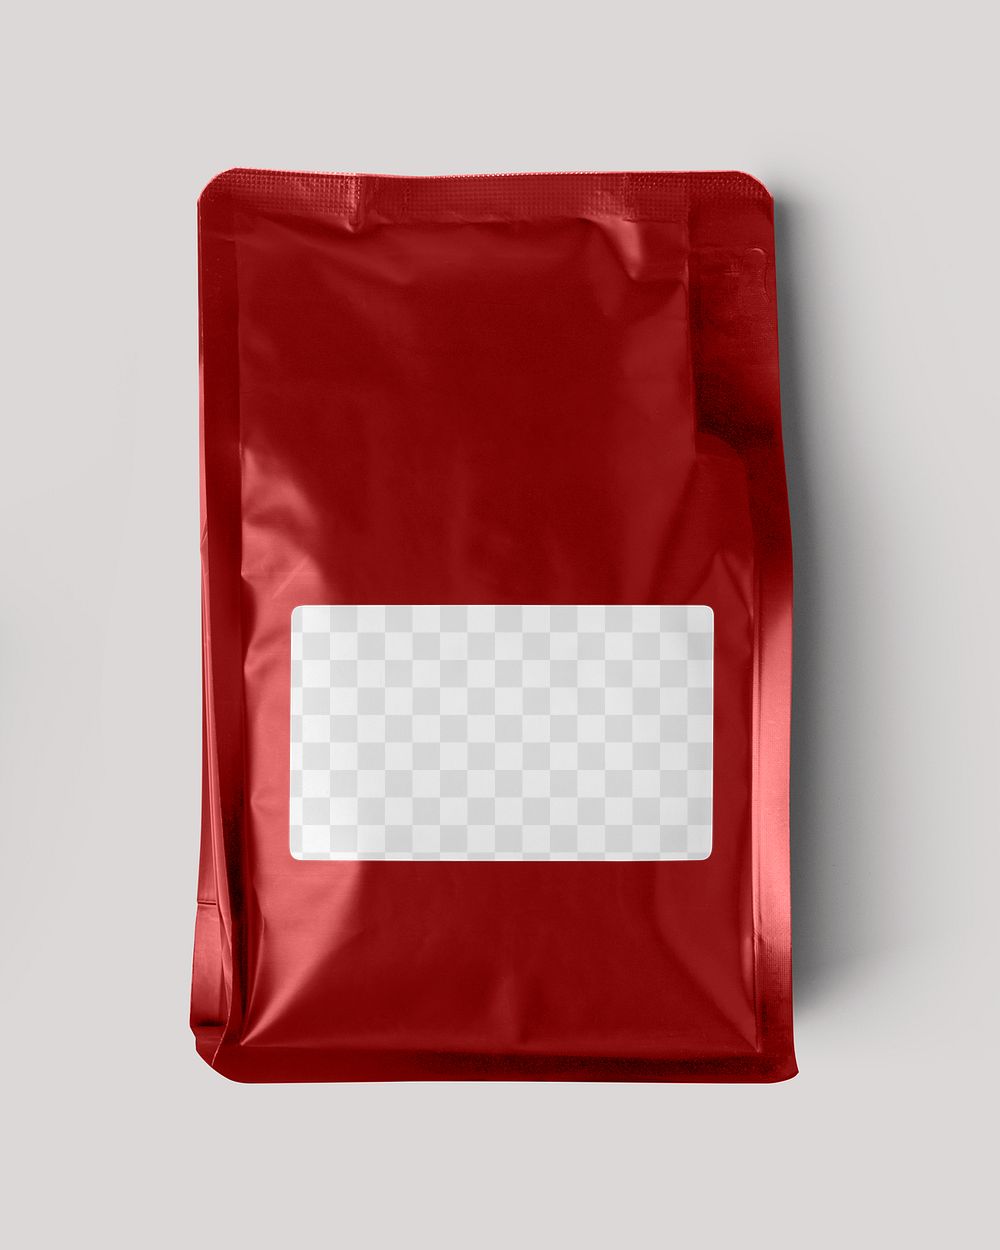 Label mockup png, transparent coffee bag, product packaging design